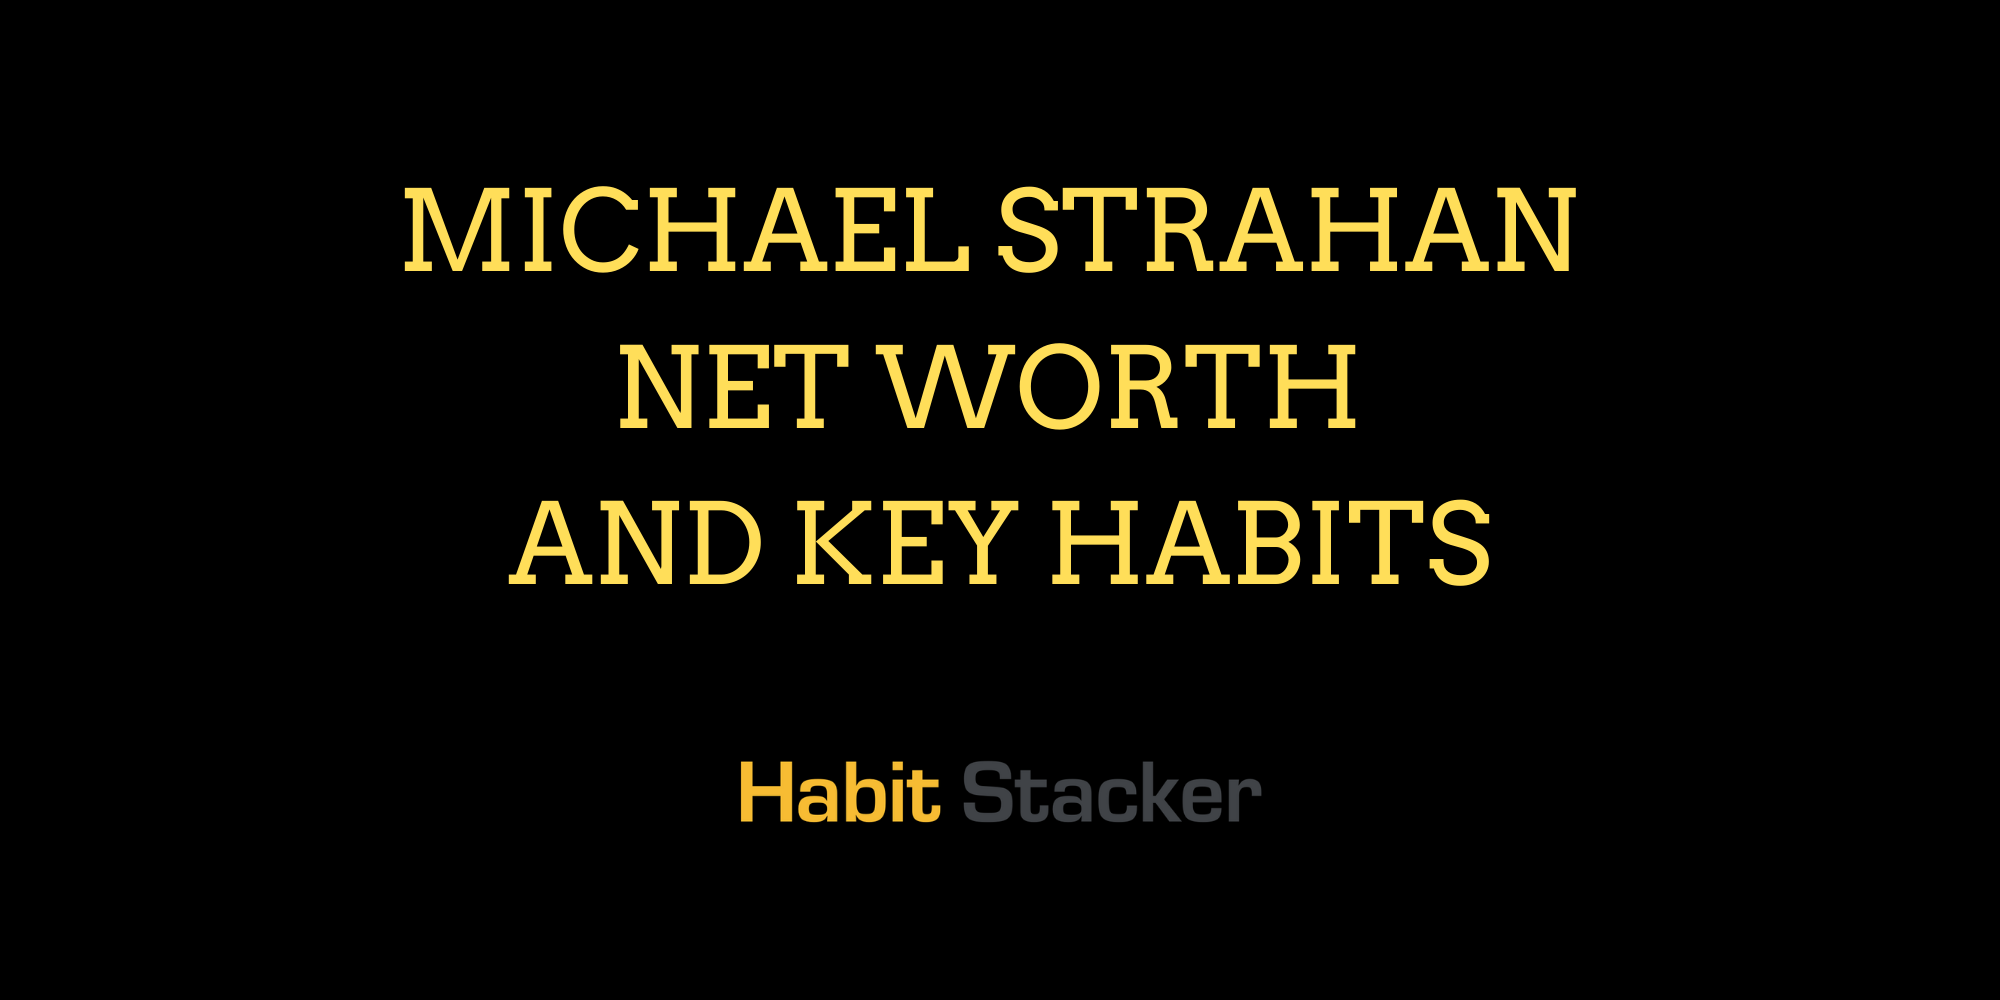 Michael Strahan Net Worth and Key Habits